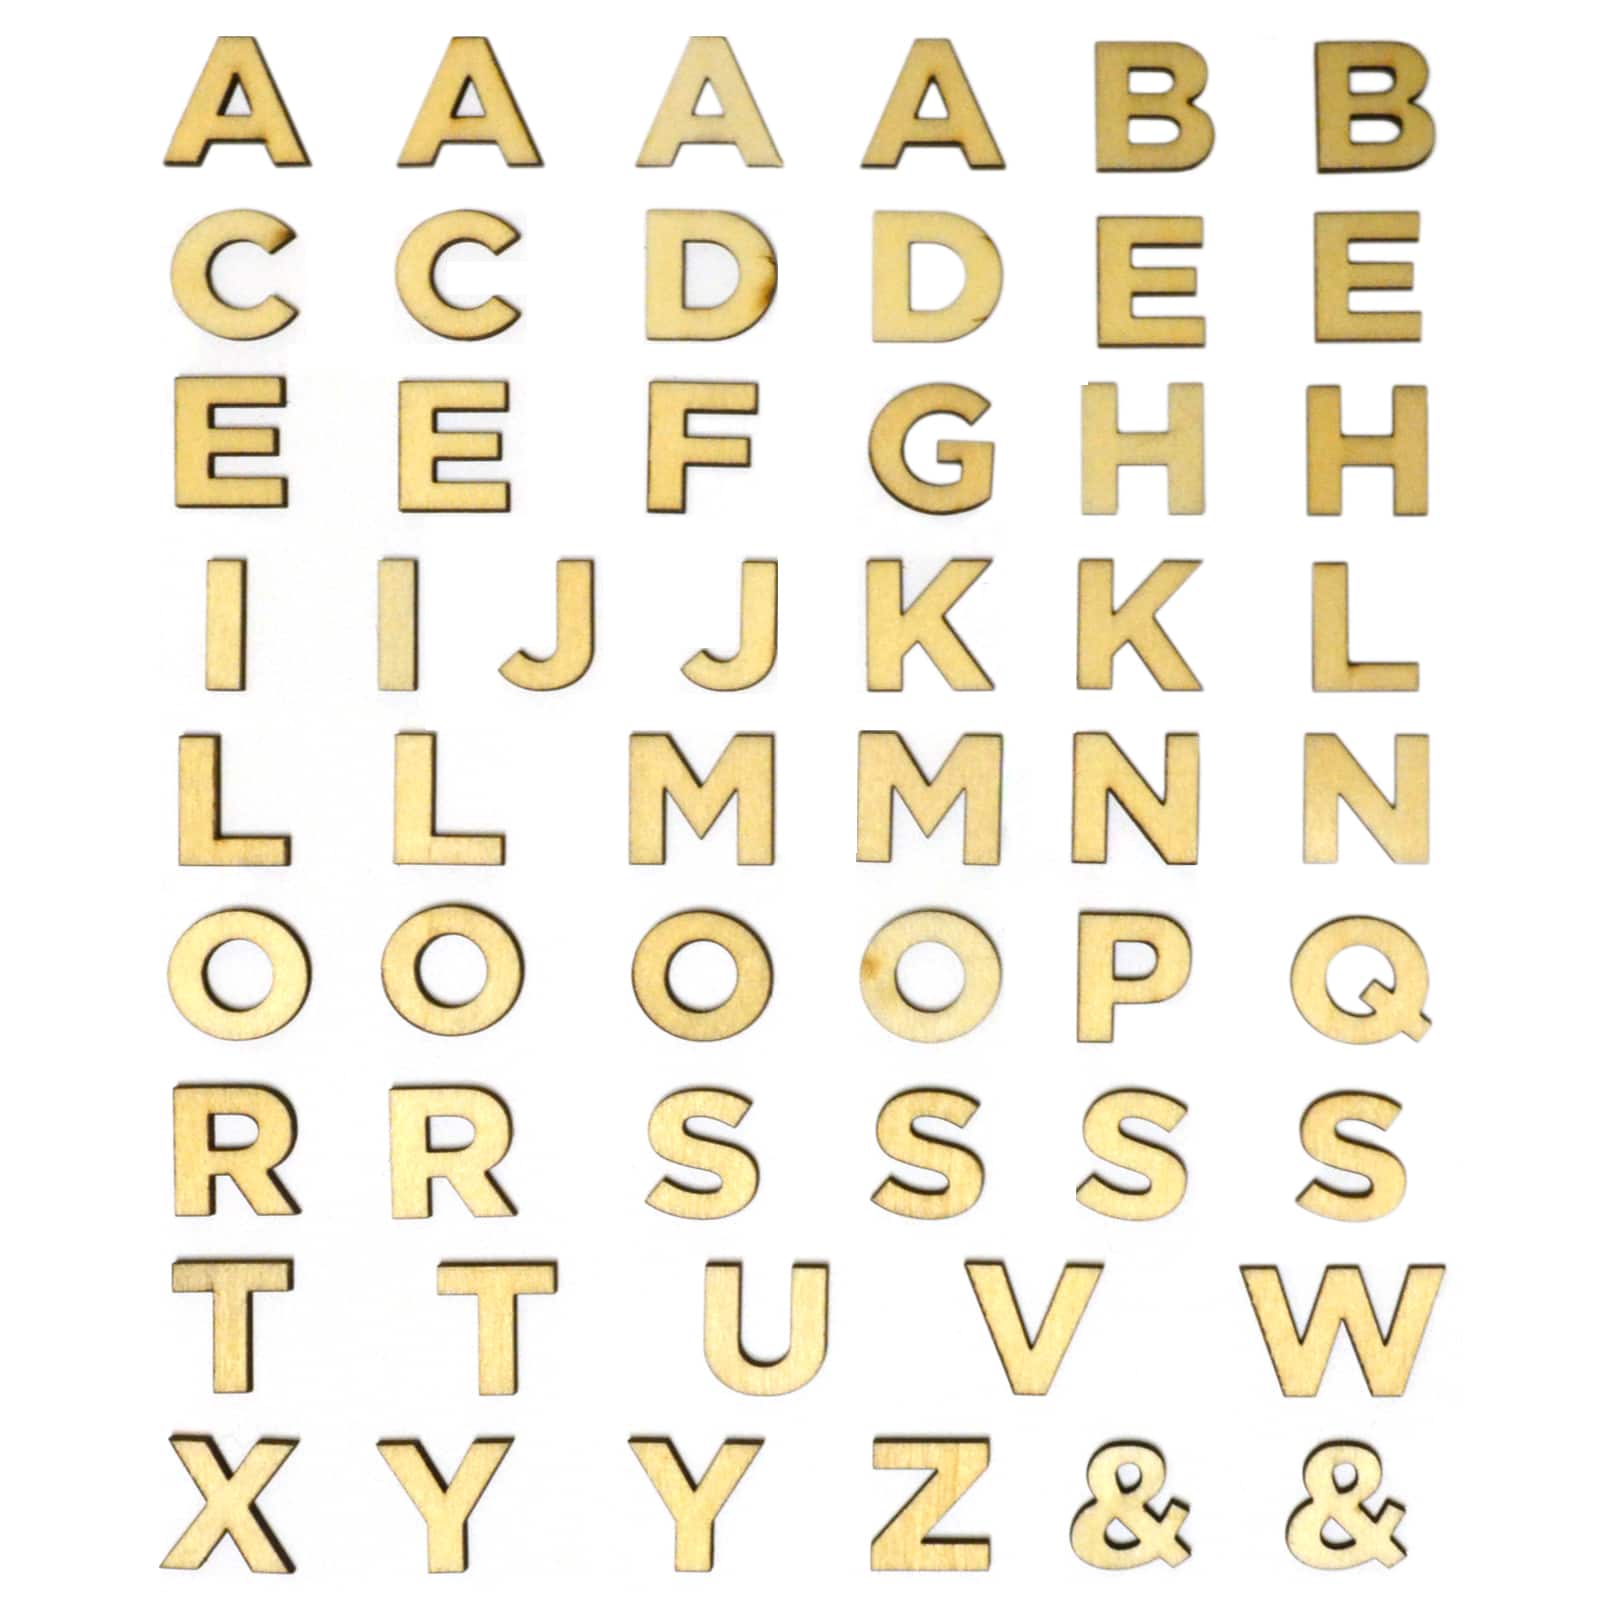 Wood Monogram Gold Accents Alphabet Letters Letter M Crafts Wall Decor